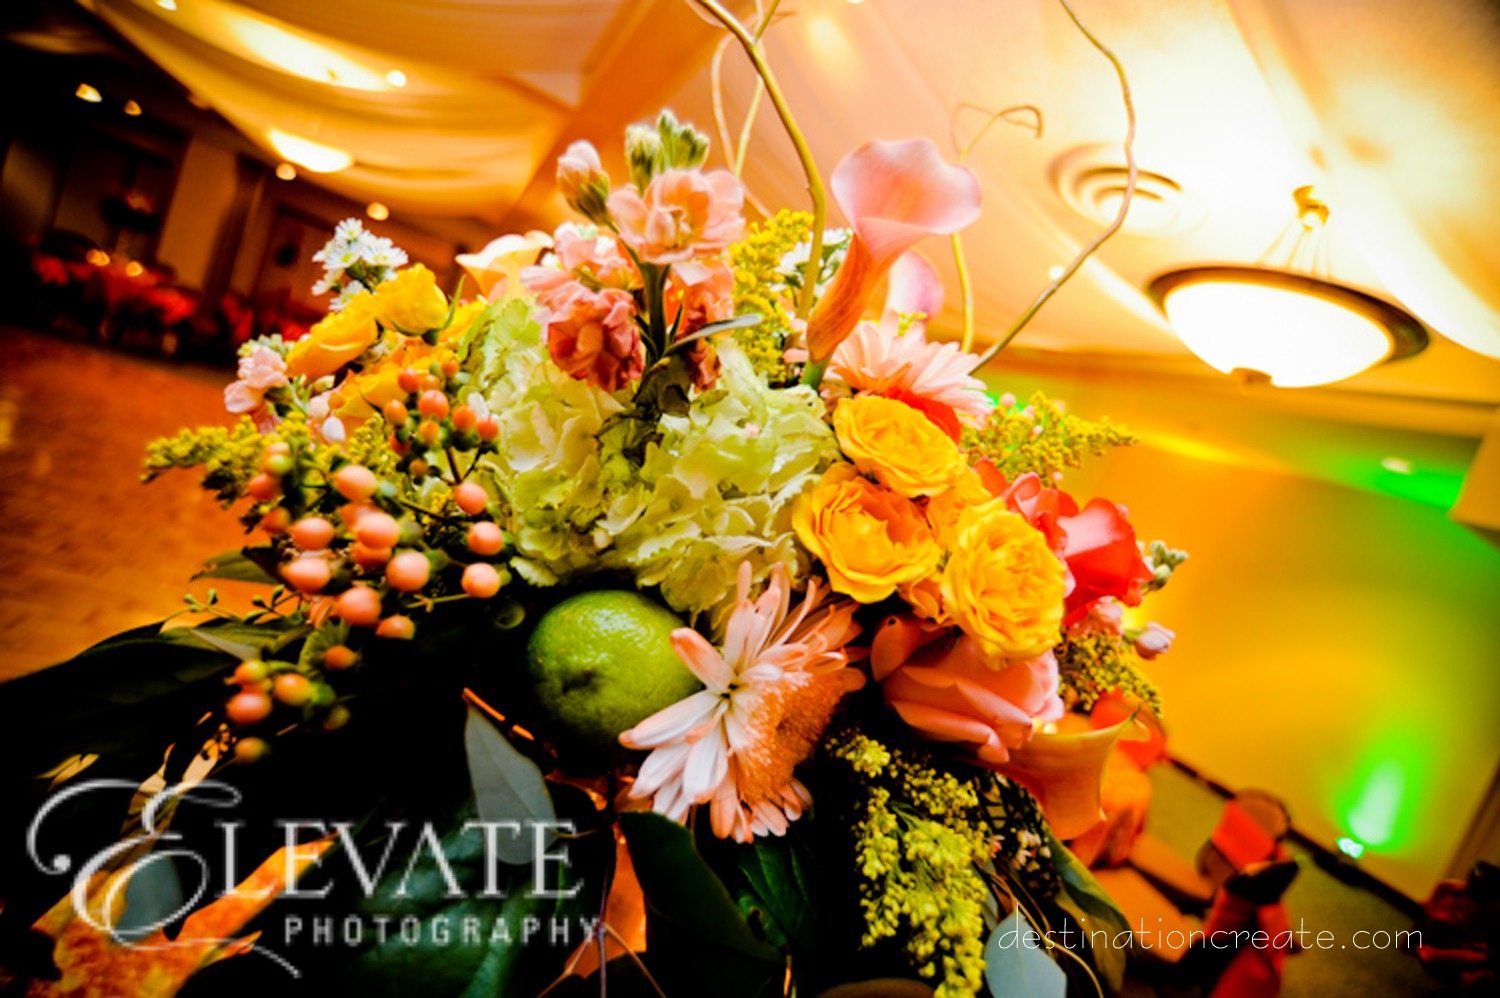 Citrus Centerpieces: Destination Create specializes in LDS wedding reception decorating, styling, planning & rentals.